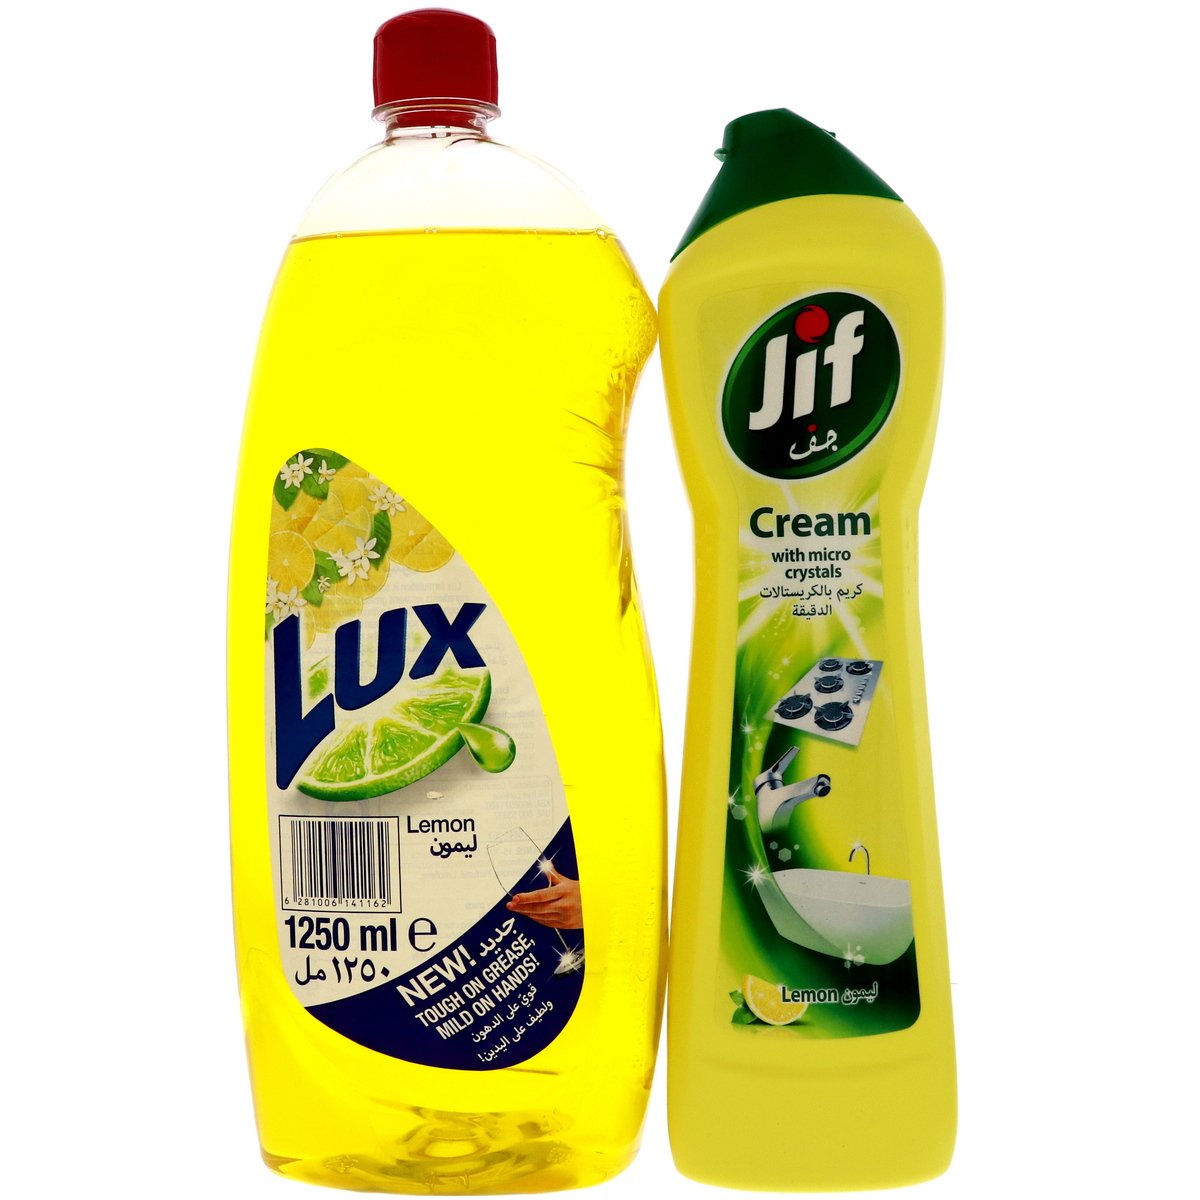 Lux Dish Wash Liquid  1.25Litre + Jif Cream  450ml Assorted